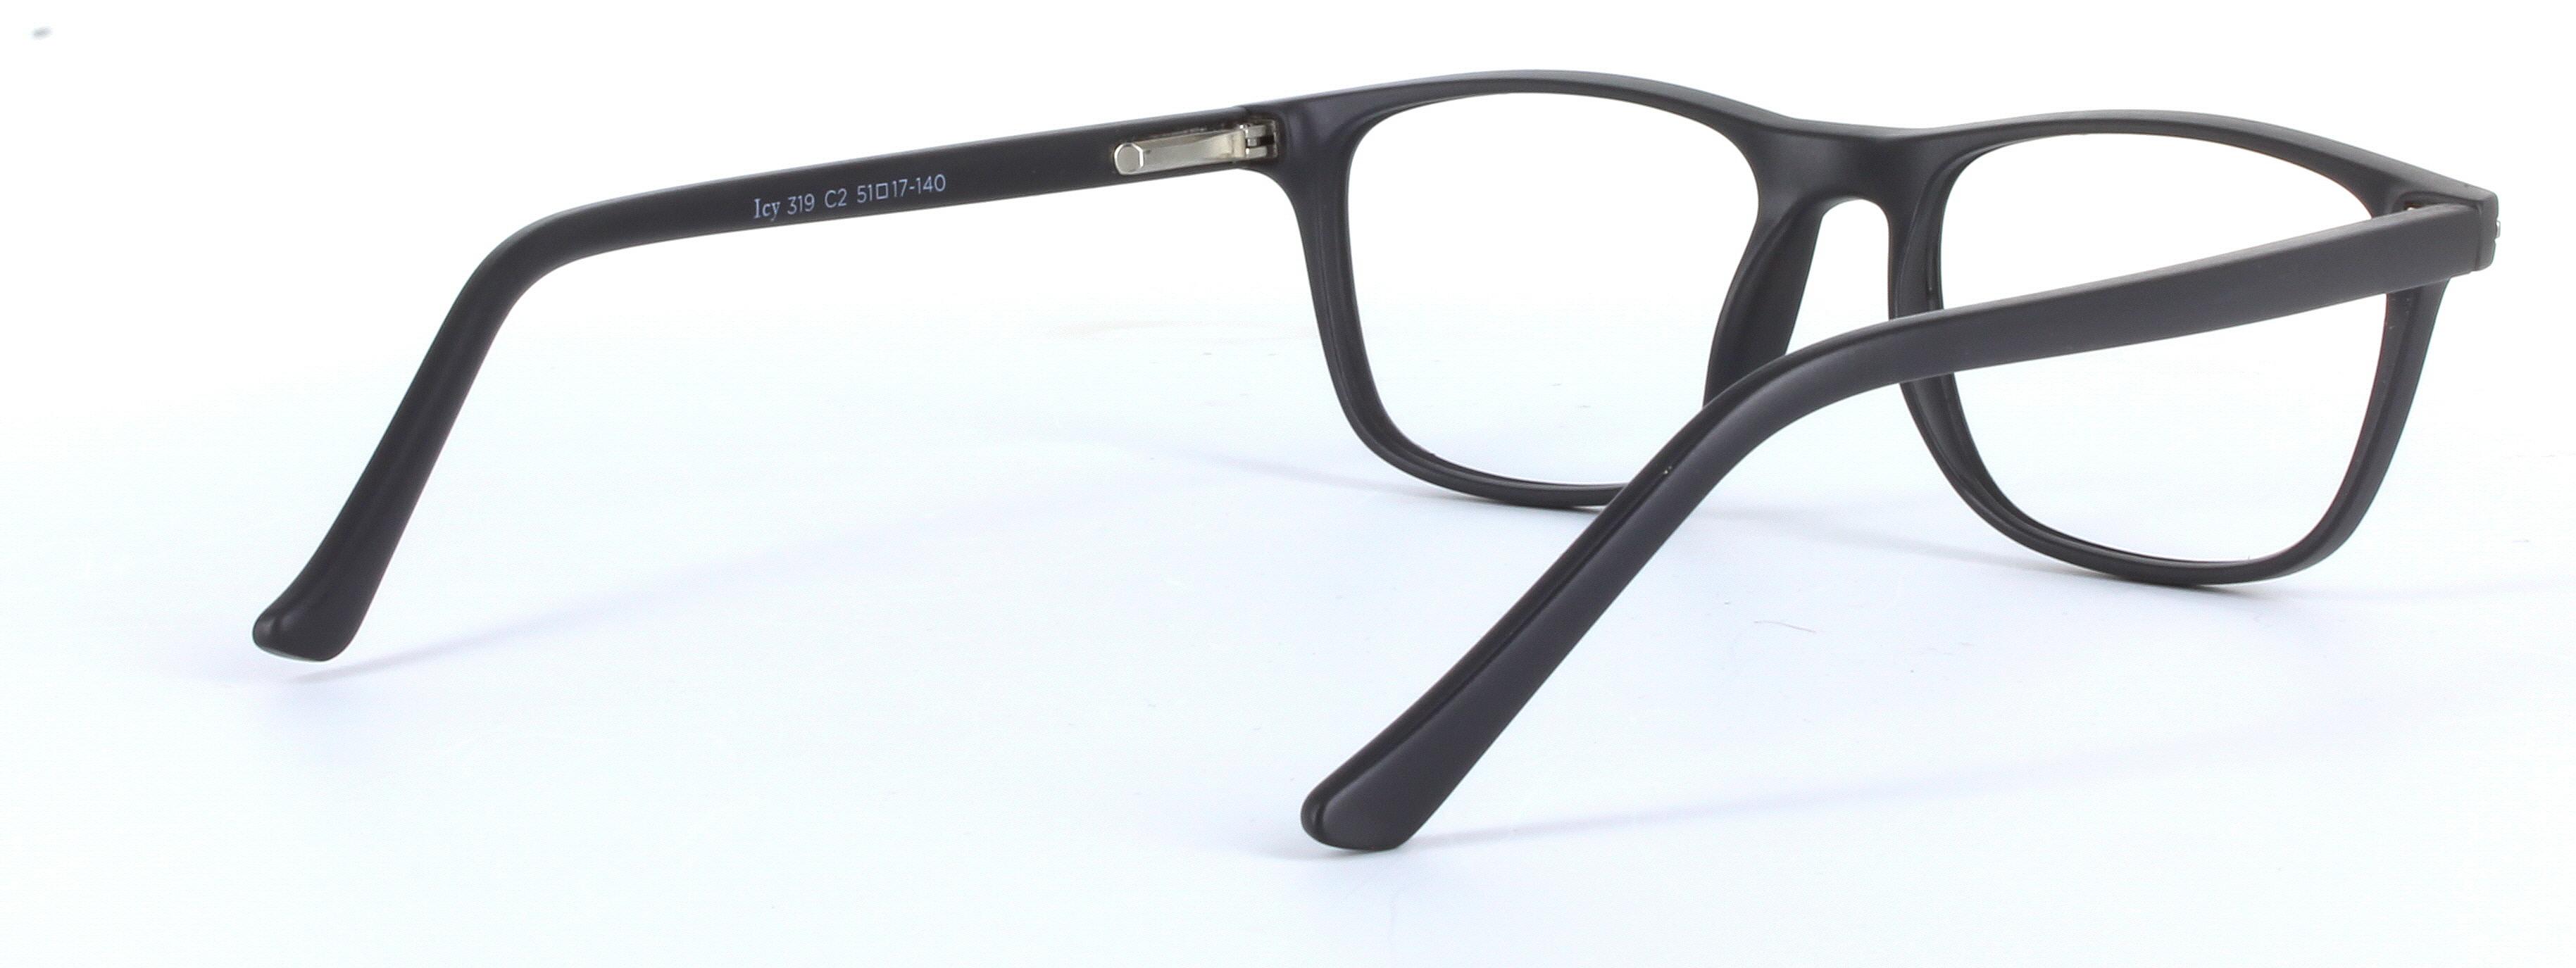 Consul Grey Full Rim Oval Round Plastic Glasses - Image View 4